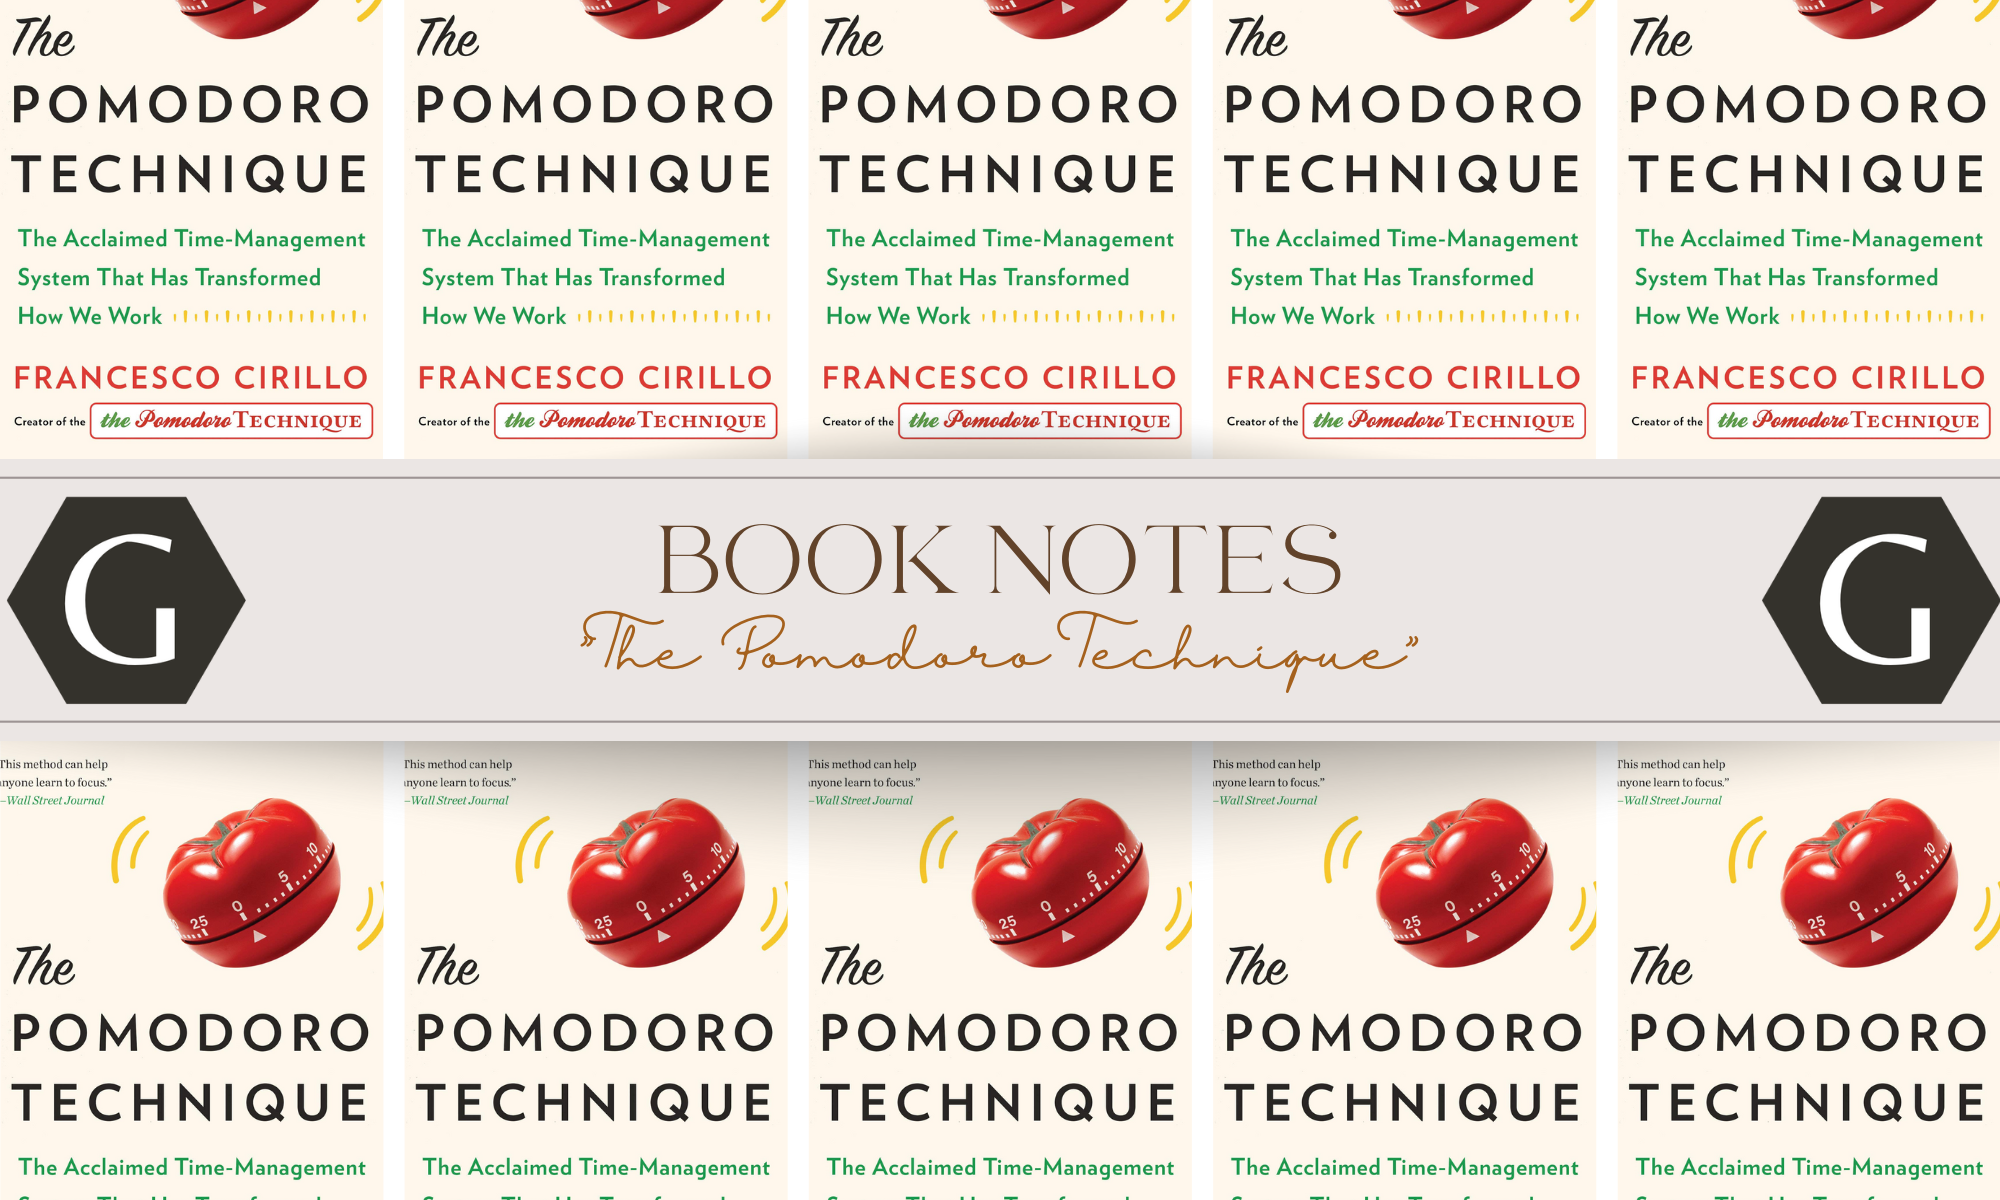 the pomodoro technique by francesco cirillo (book summary)